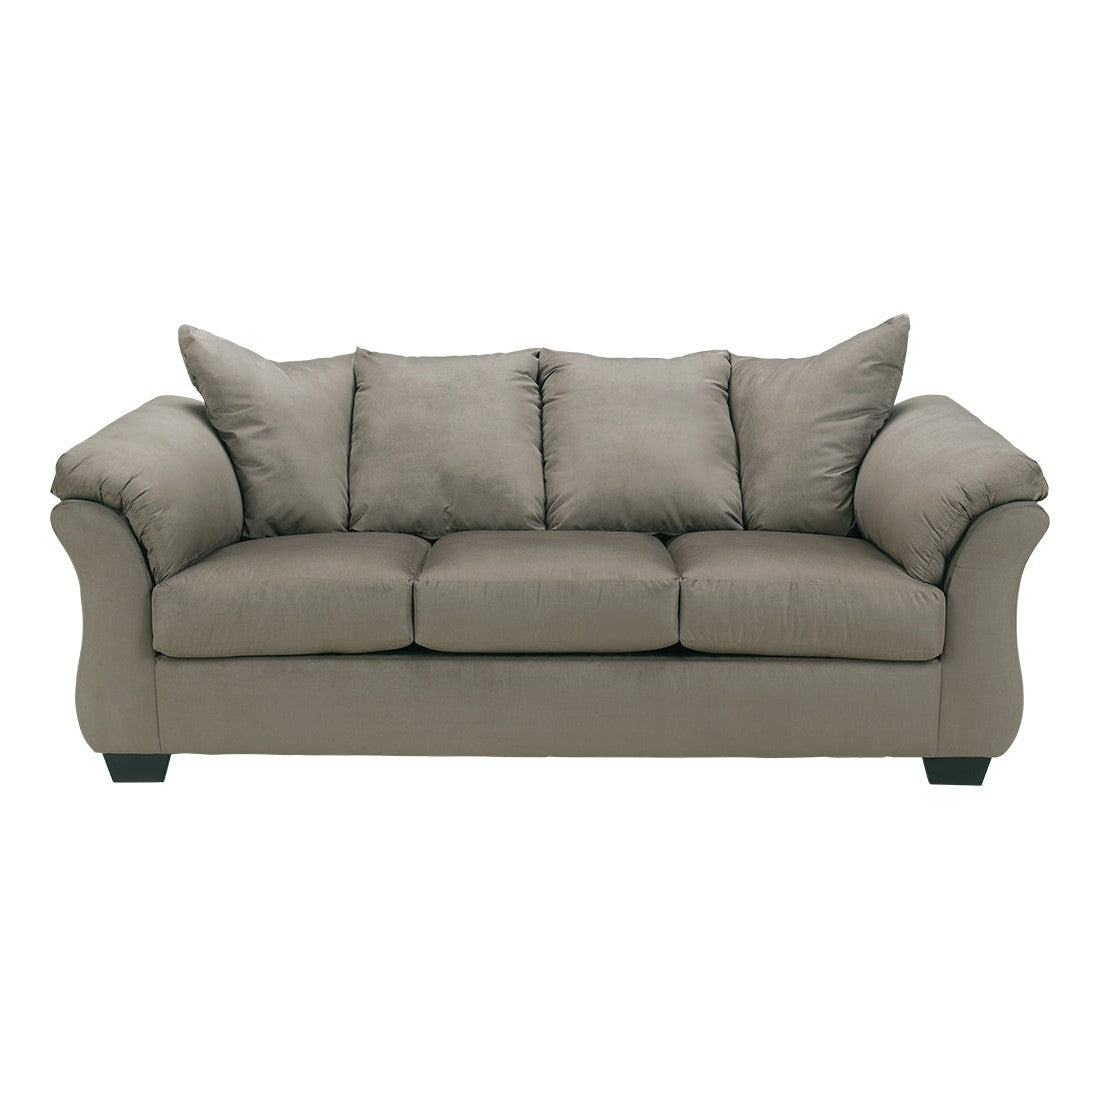 Darcy Full Sofa Sleeper Ash-7500536